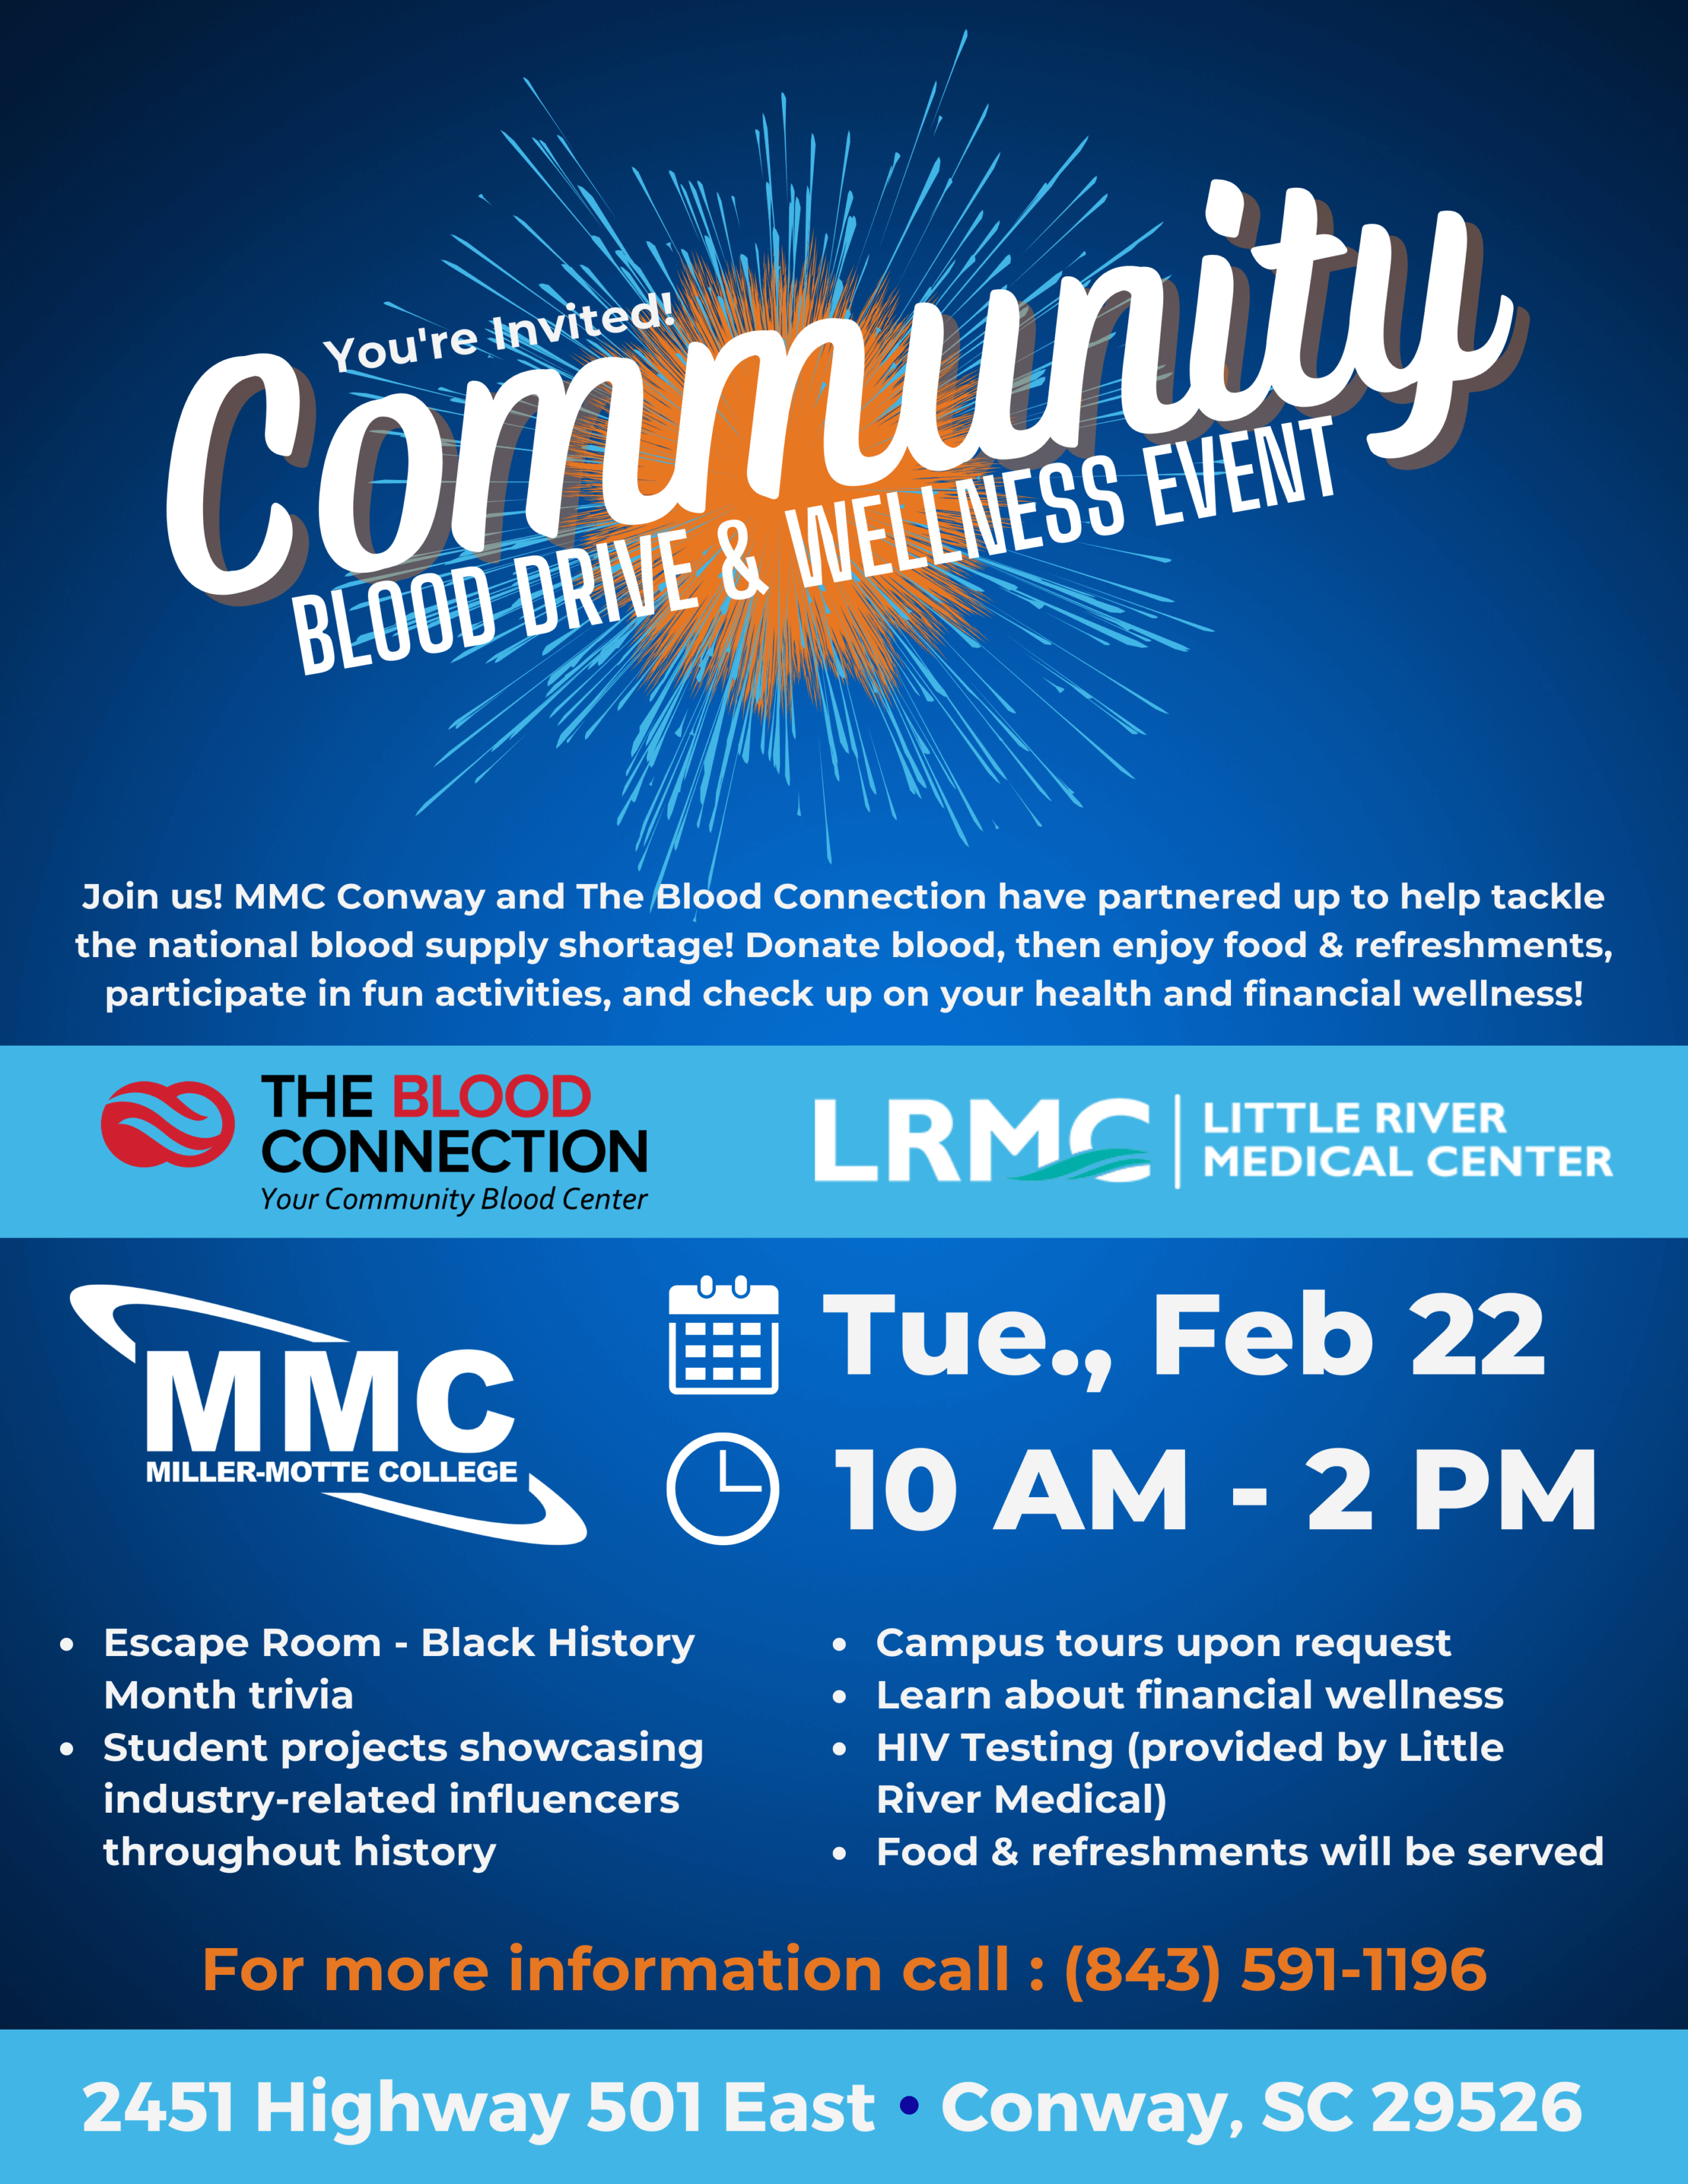 MMC Community Blood Drive & Wellness Event